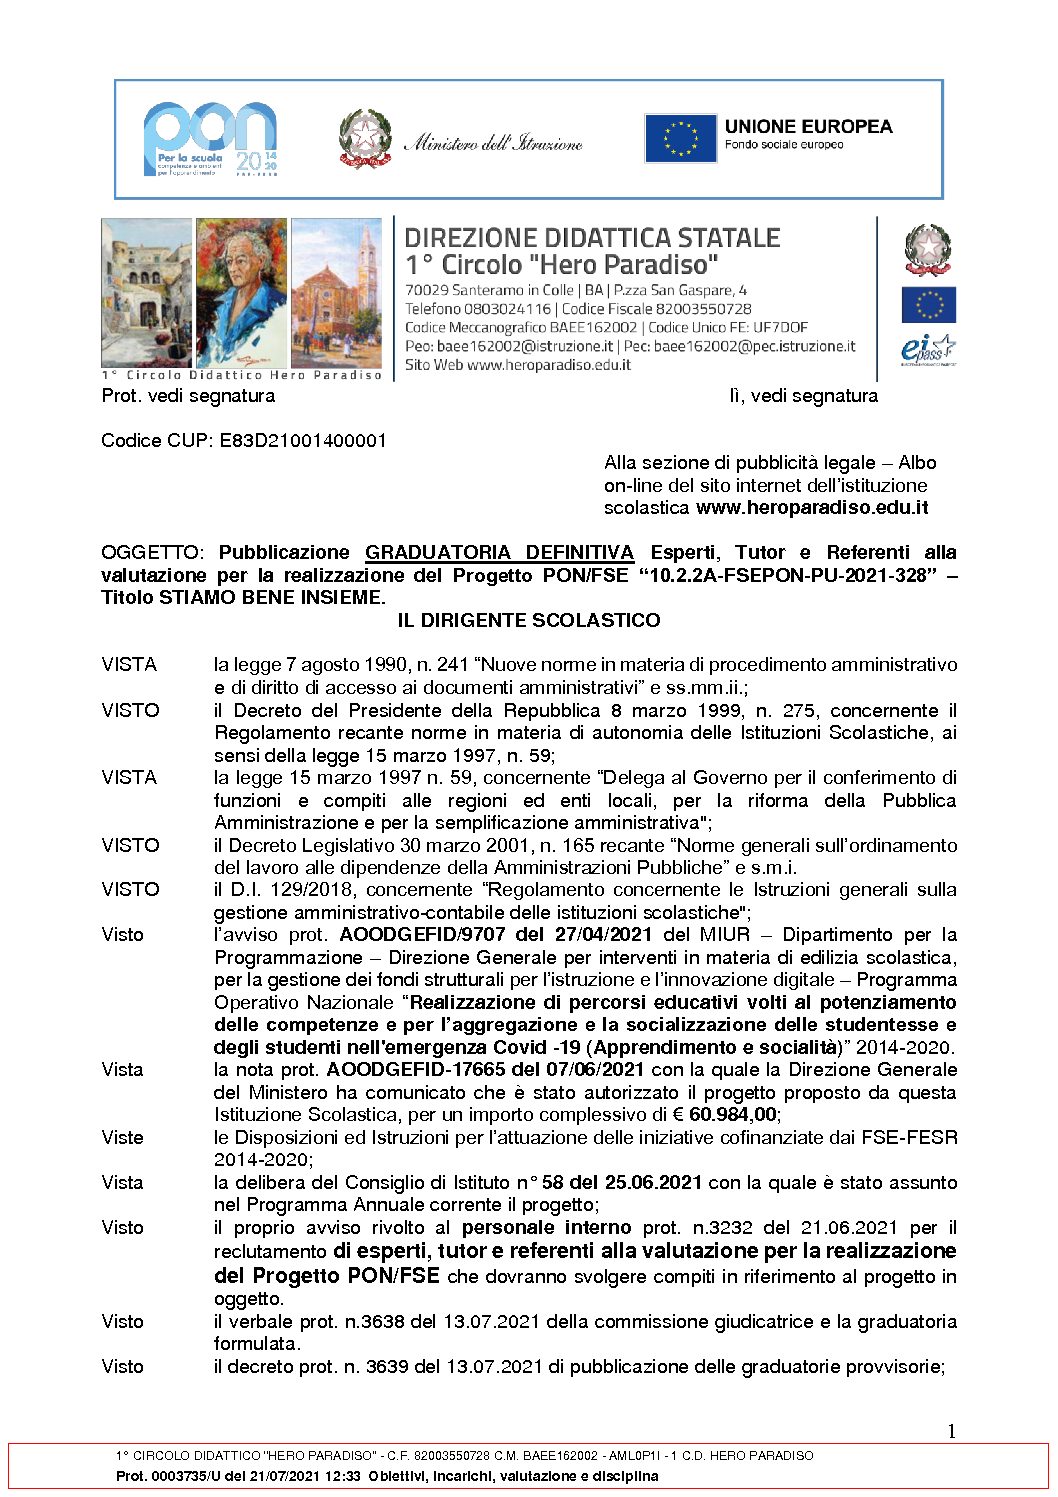 6._Graduatoria_DEFINITIVA_Interni_PON_2021-328.pdf.pades